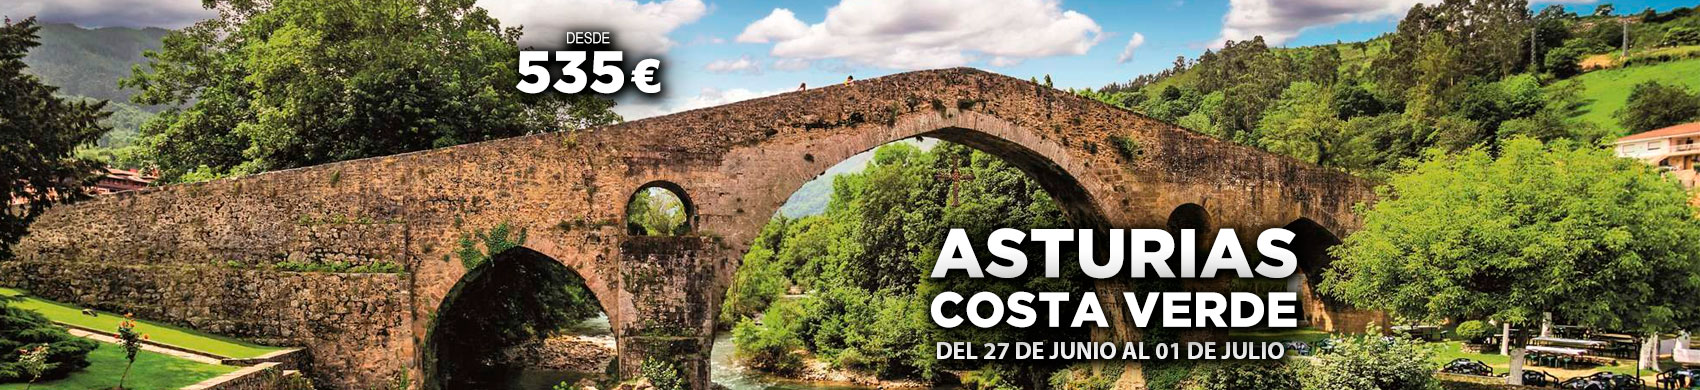 Asturias Costa Verde